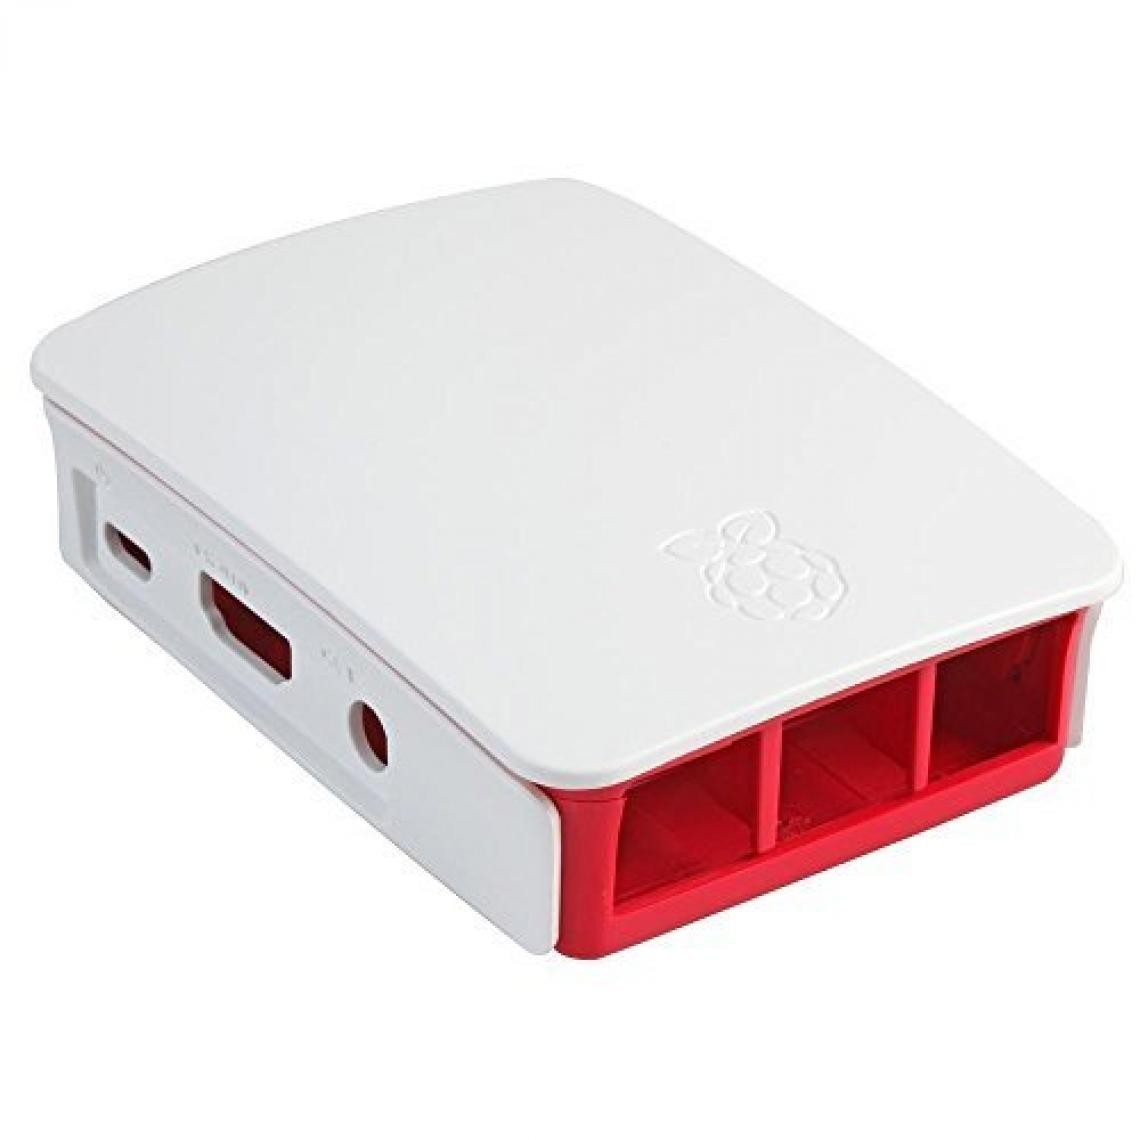 Raspberry - Pi 2 / Pi 3 / Modèle B+ logement, blanc/rouge - Boitier PC